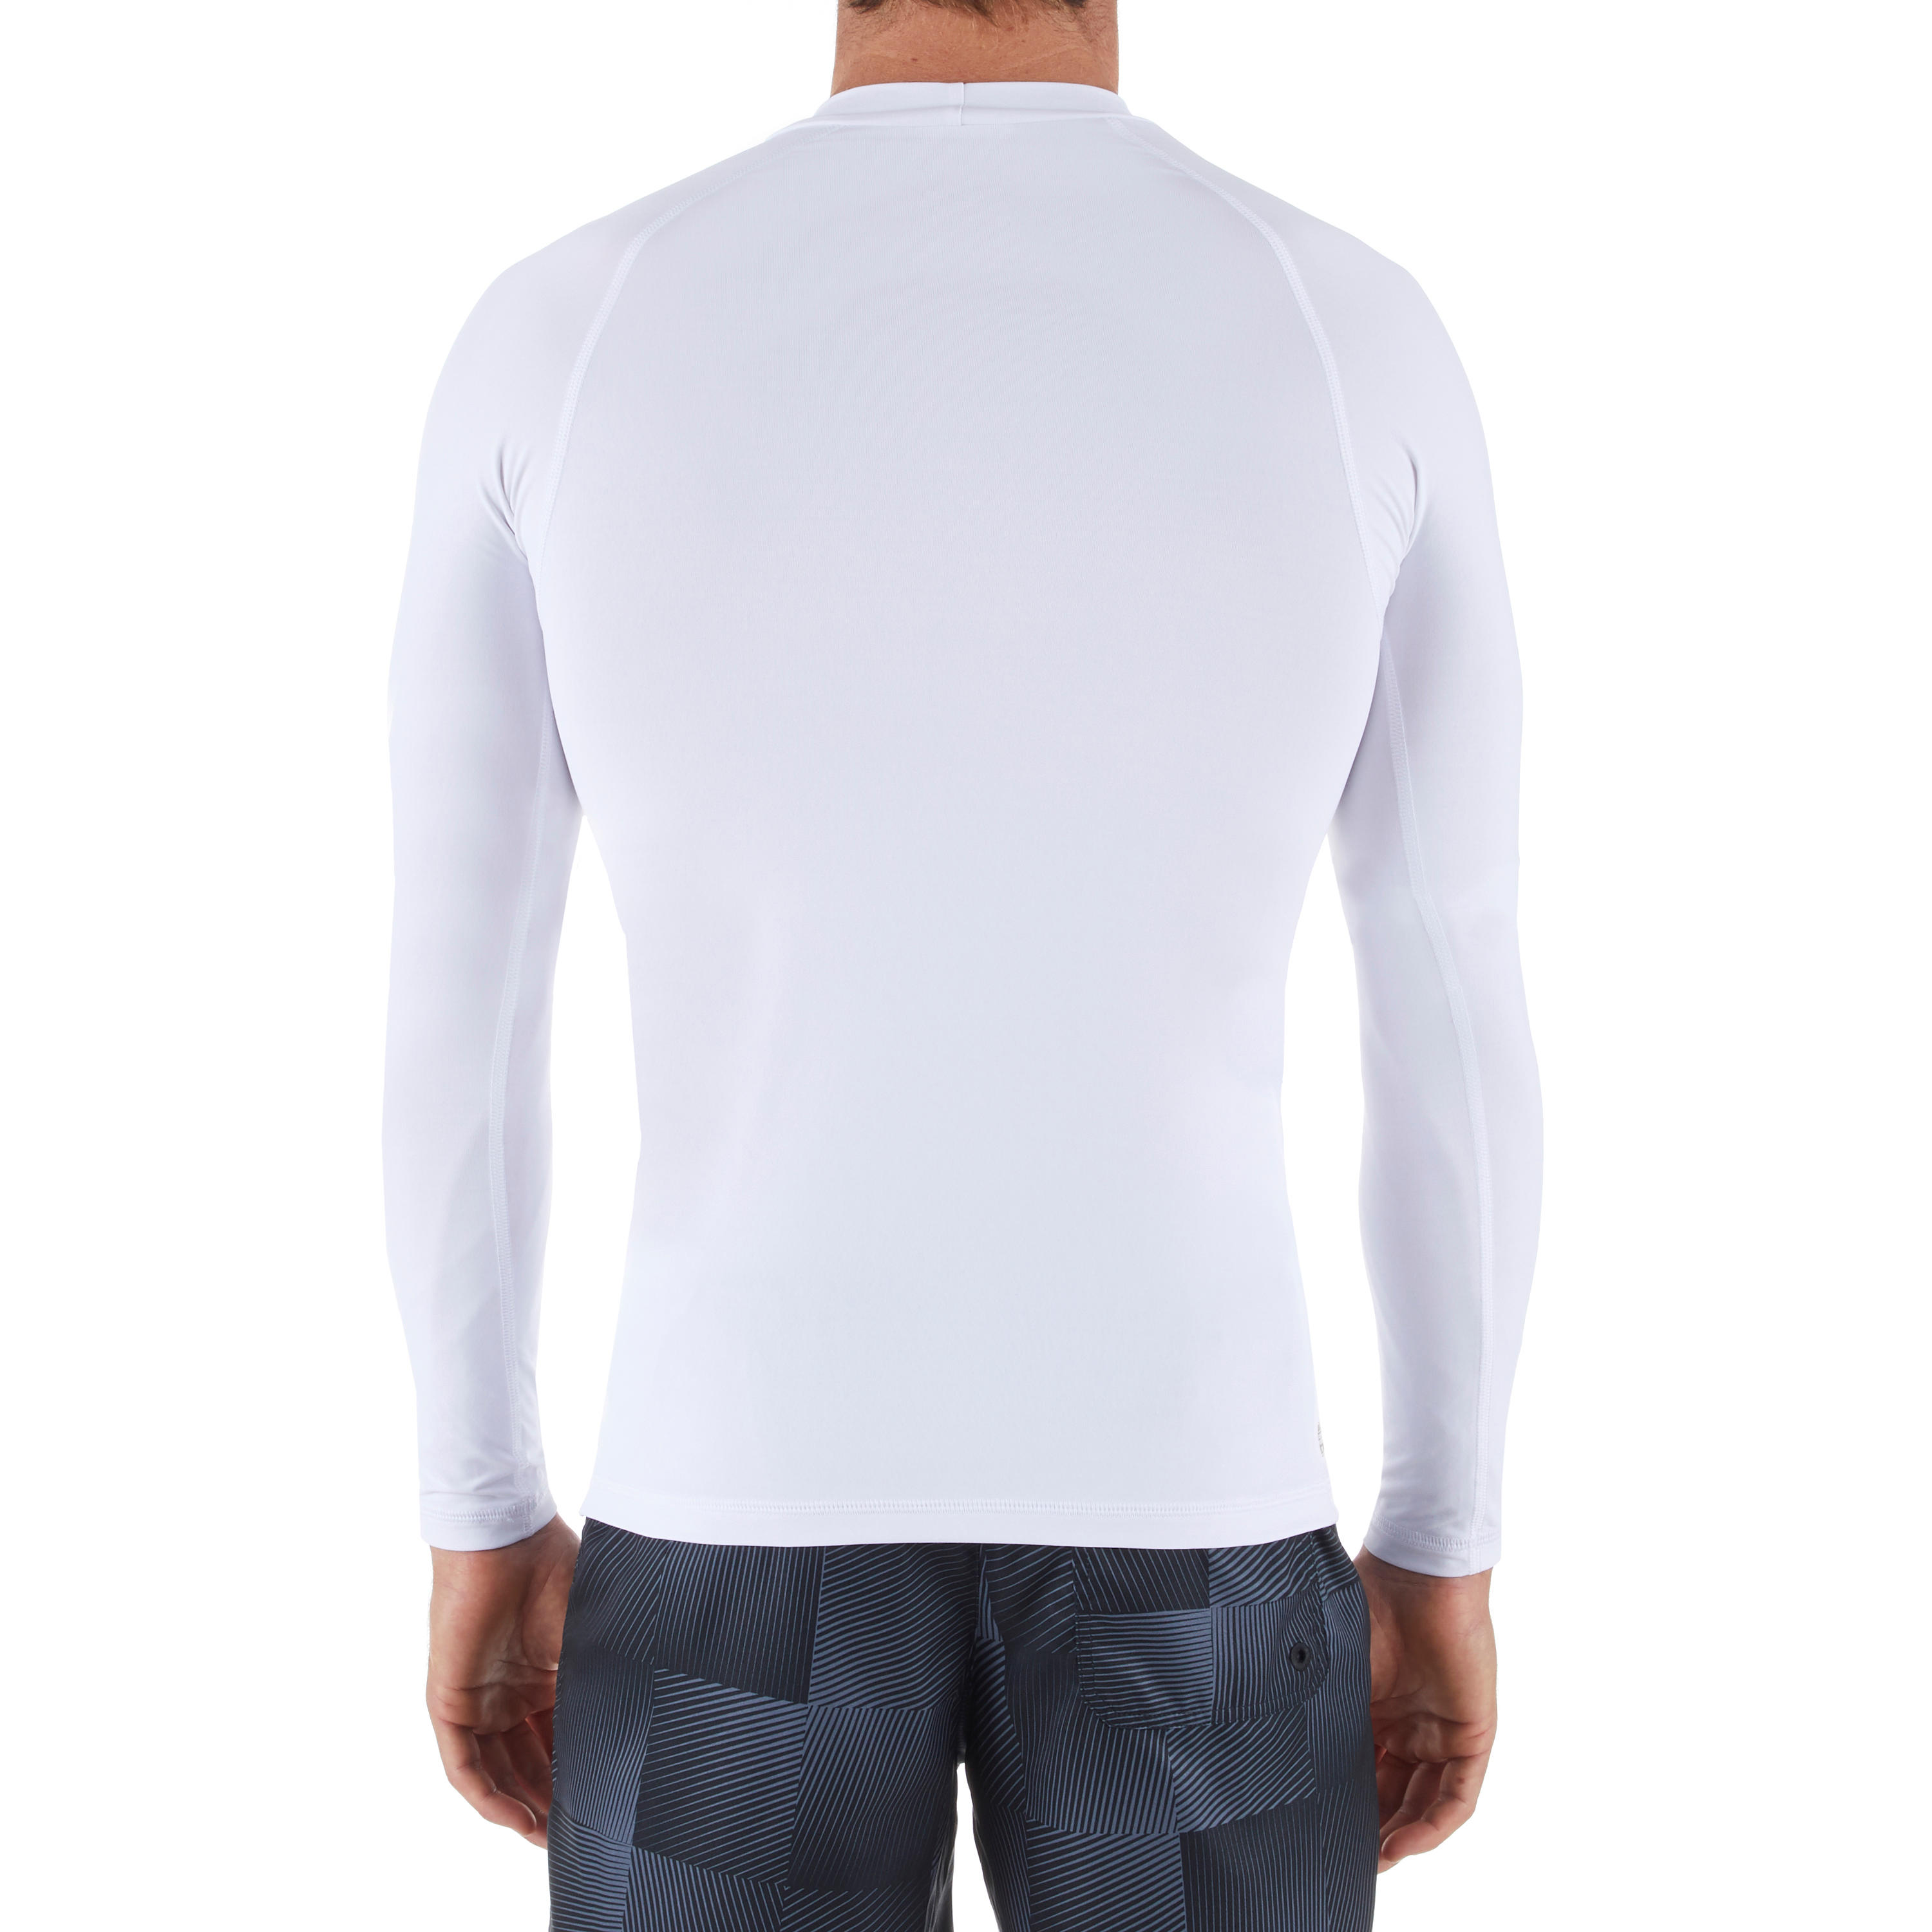 Olaian 100 Men's Long Sleeve UV Protection Surfing Top T-Shirt - White